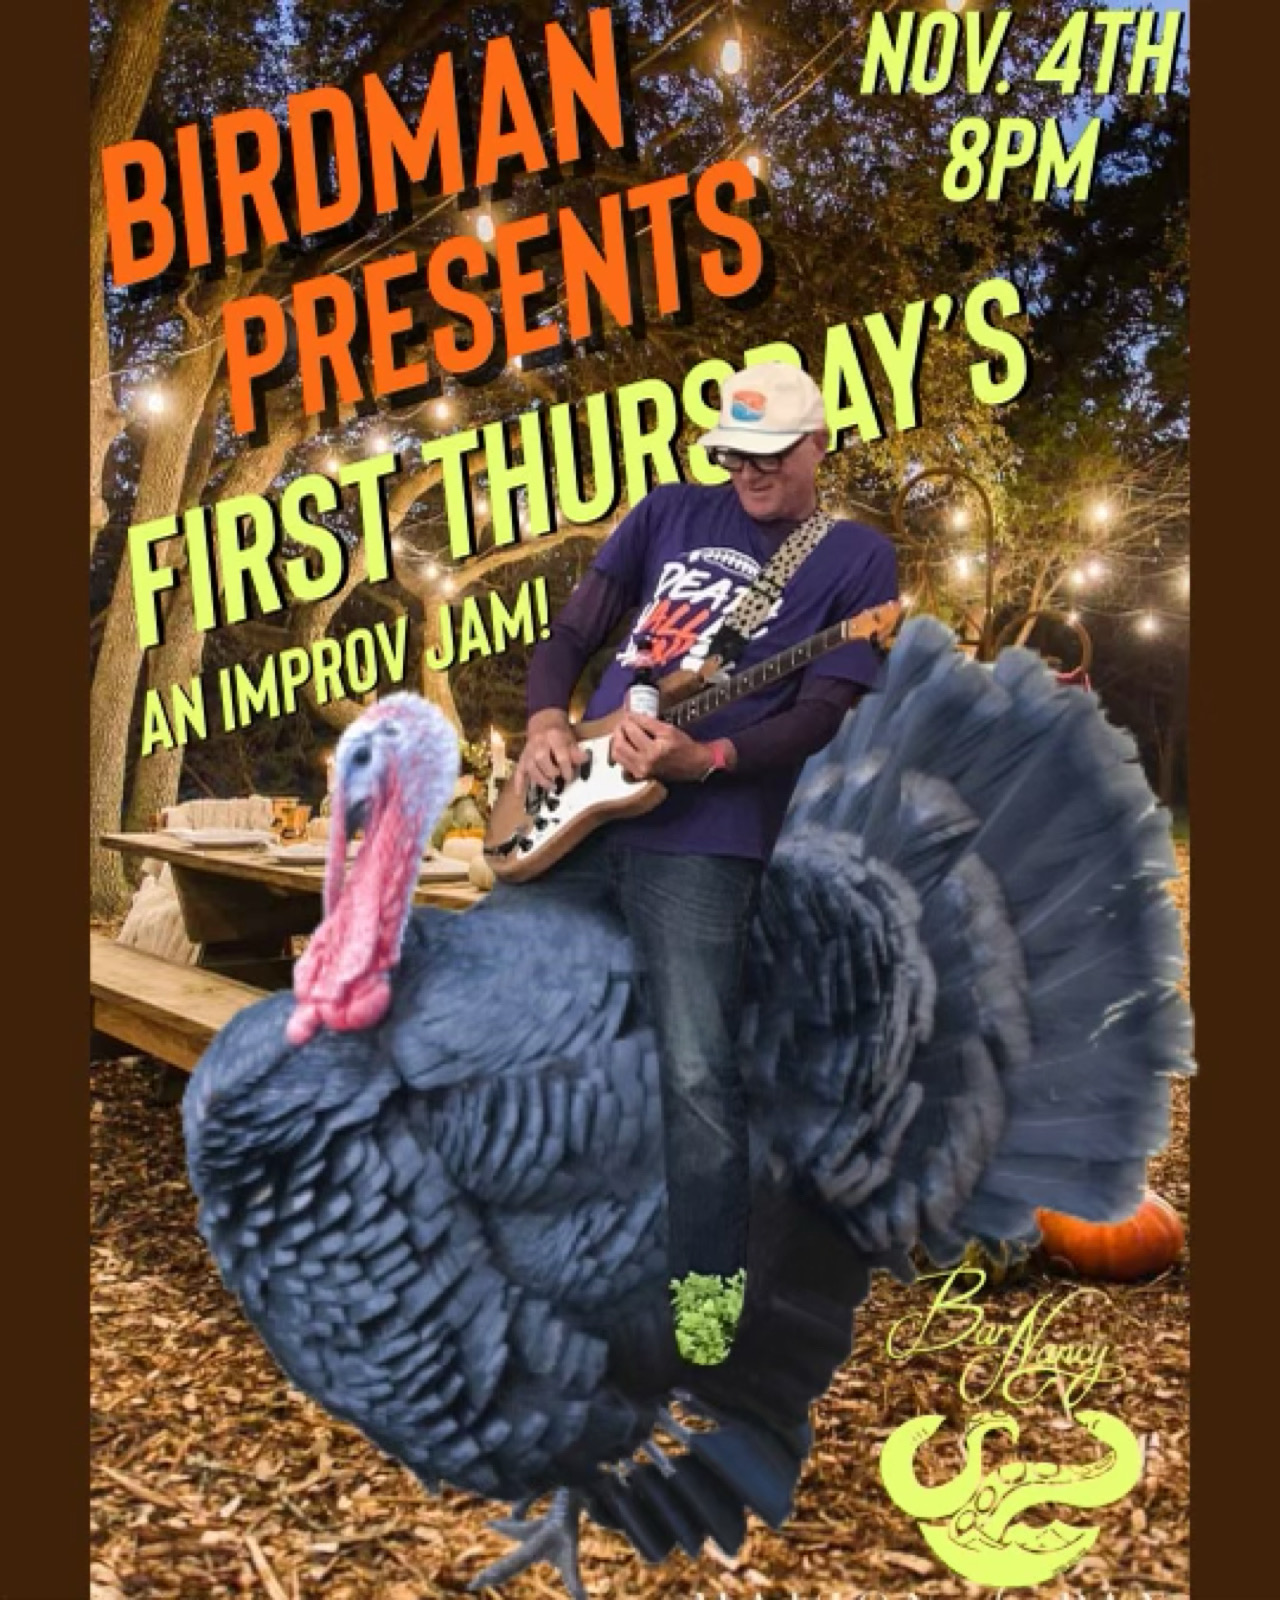 BIRDMAN PRESENTS...1st Thursdays! at Bar Nancy - Nov 4th at 8pm